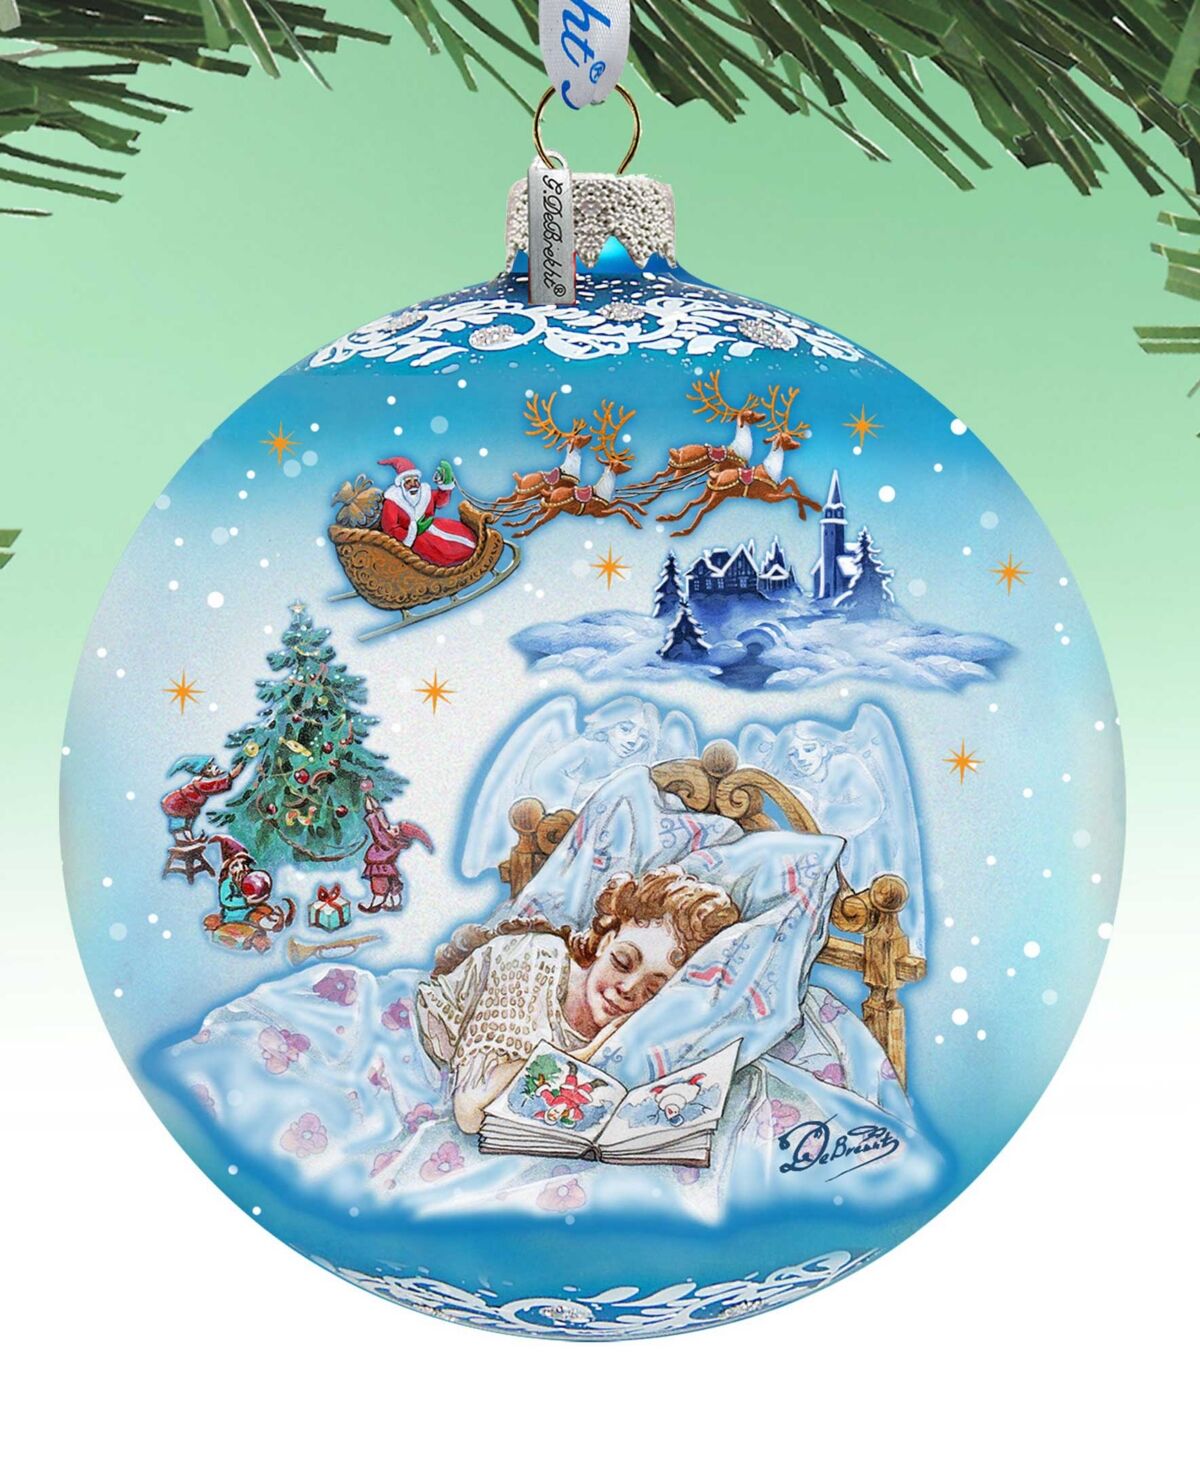 Designocracy Winter Fairy Tale Dream Large Christmas Glass Collectible Ornaments G. DeBrekht - Multi Color